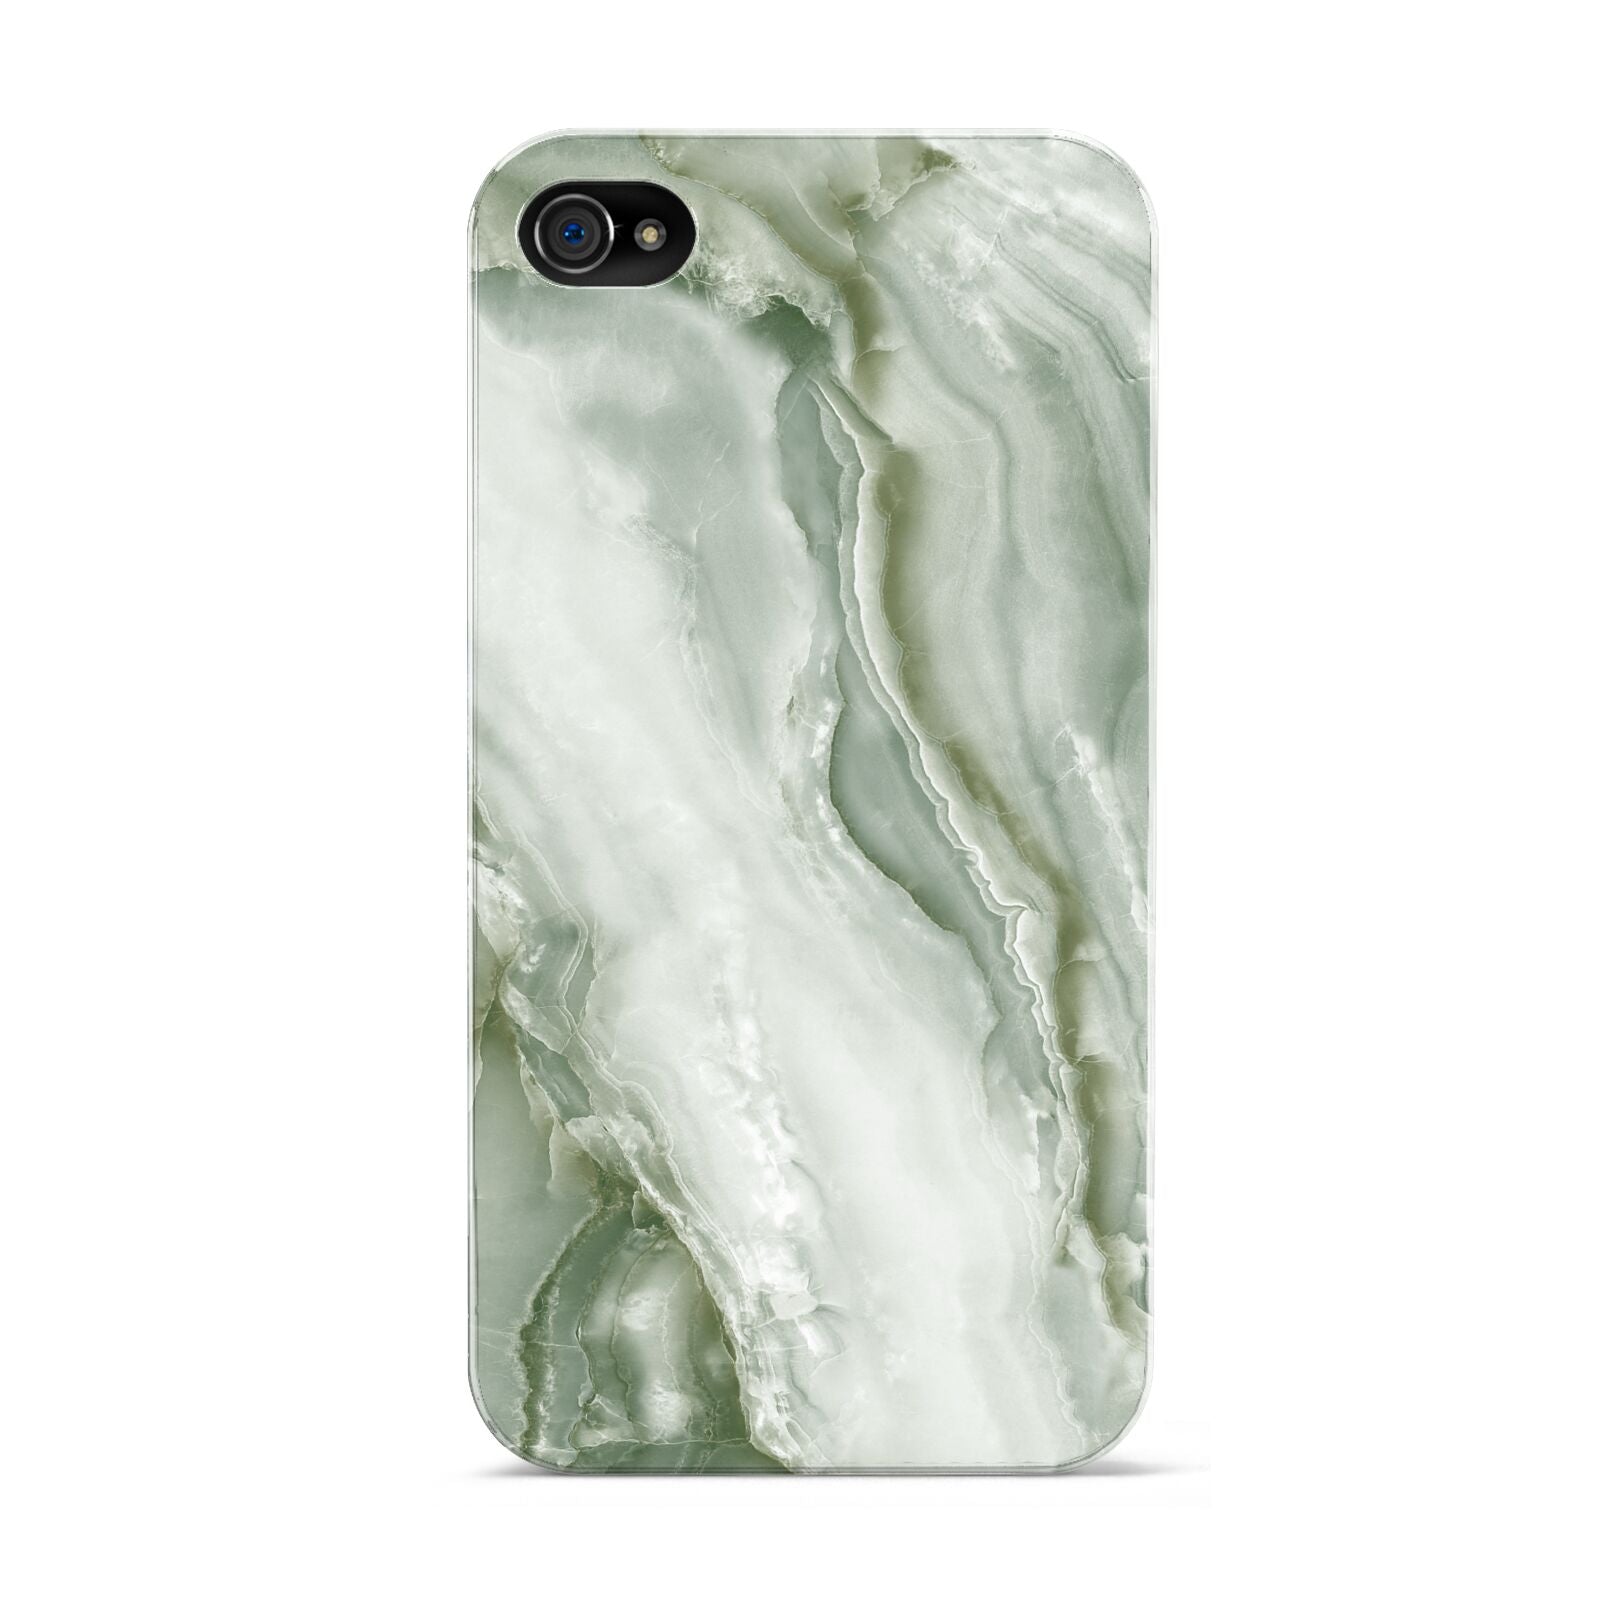 Pistachio Green Marble Apple iPhone 4s Case